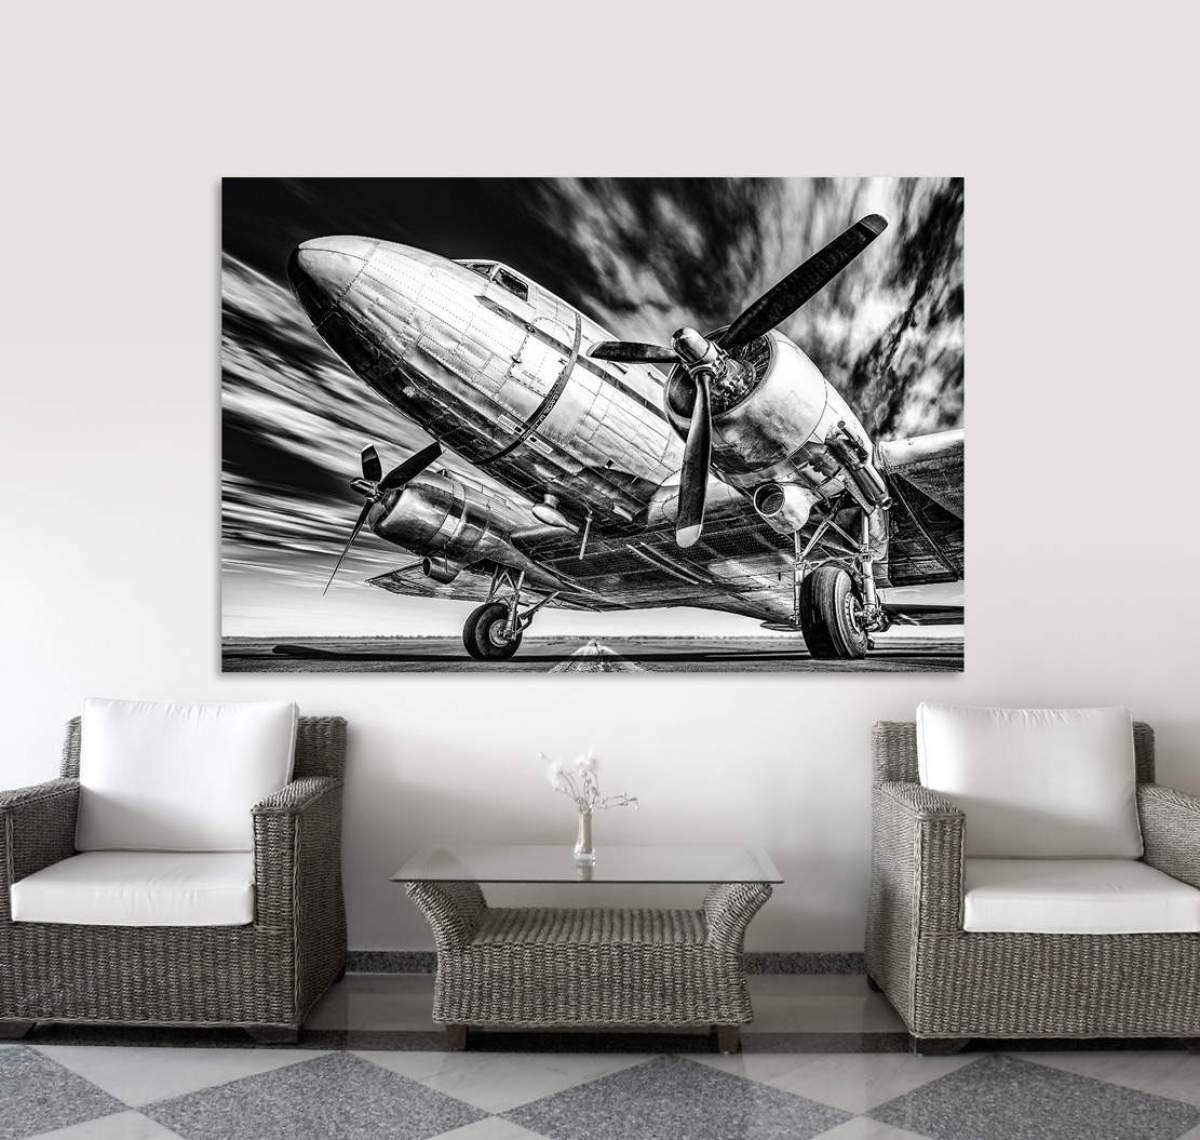 Flugzeug Retro Wohnzimmer Bild Foto Leinwand Poster Wandbild 100 cm*65 cm 736 sw 